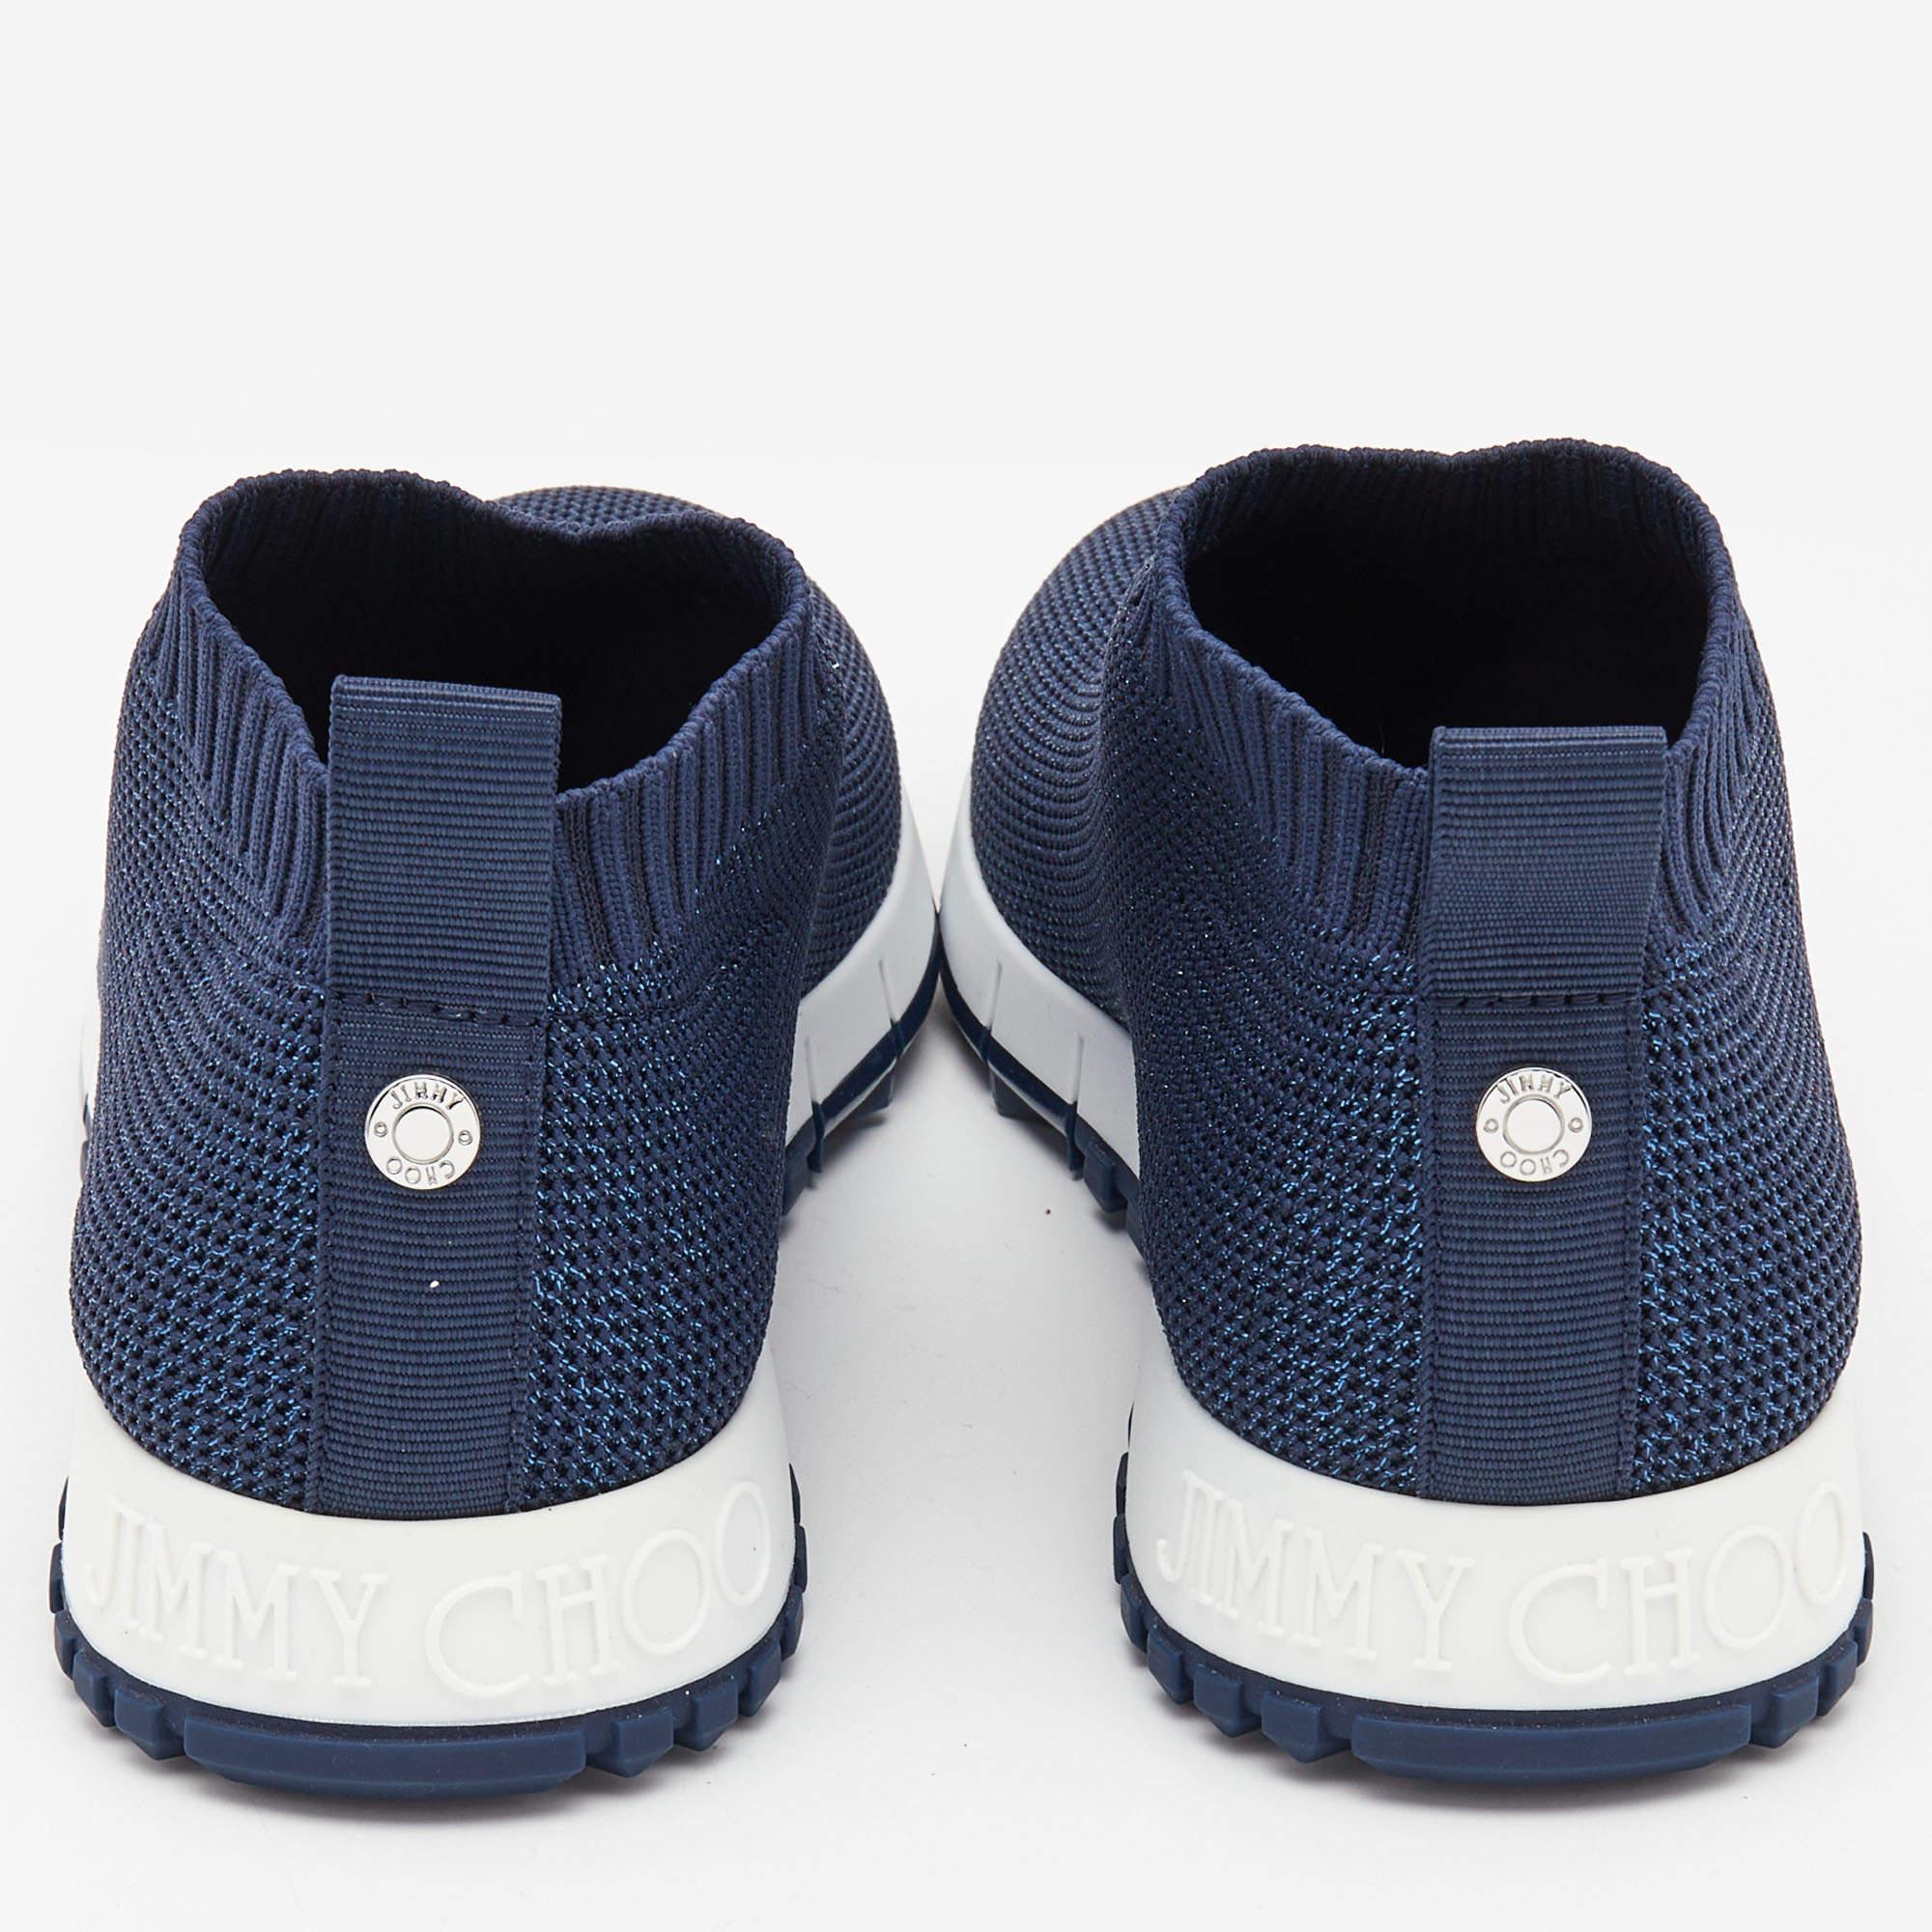 Jimmy Choo Navy Blue Glitter Fabric Low Top Sneakers Size 36.5 1